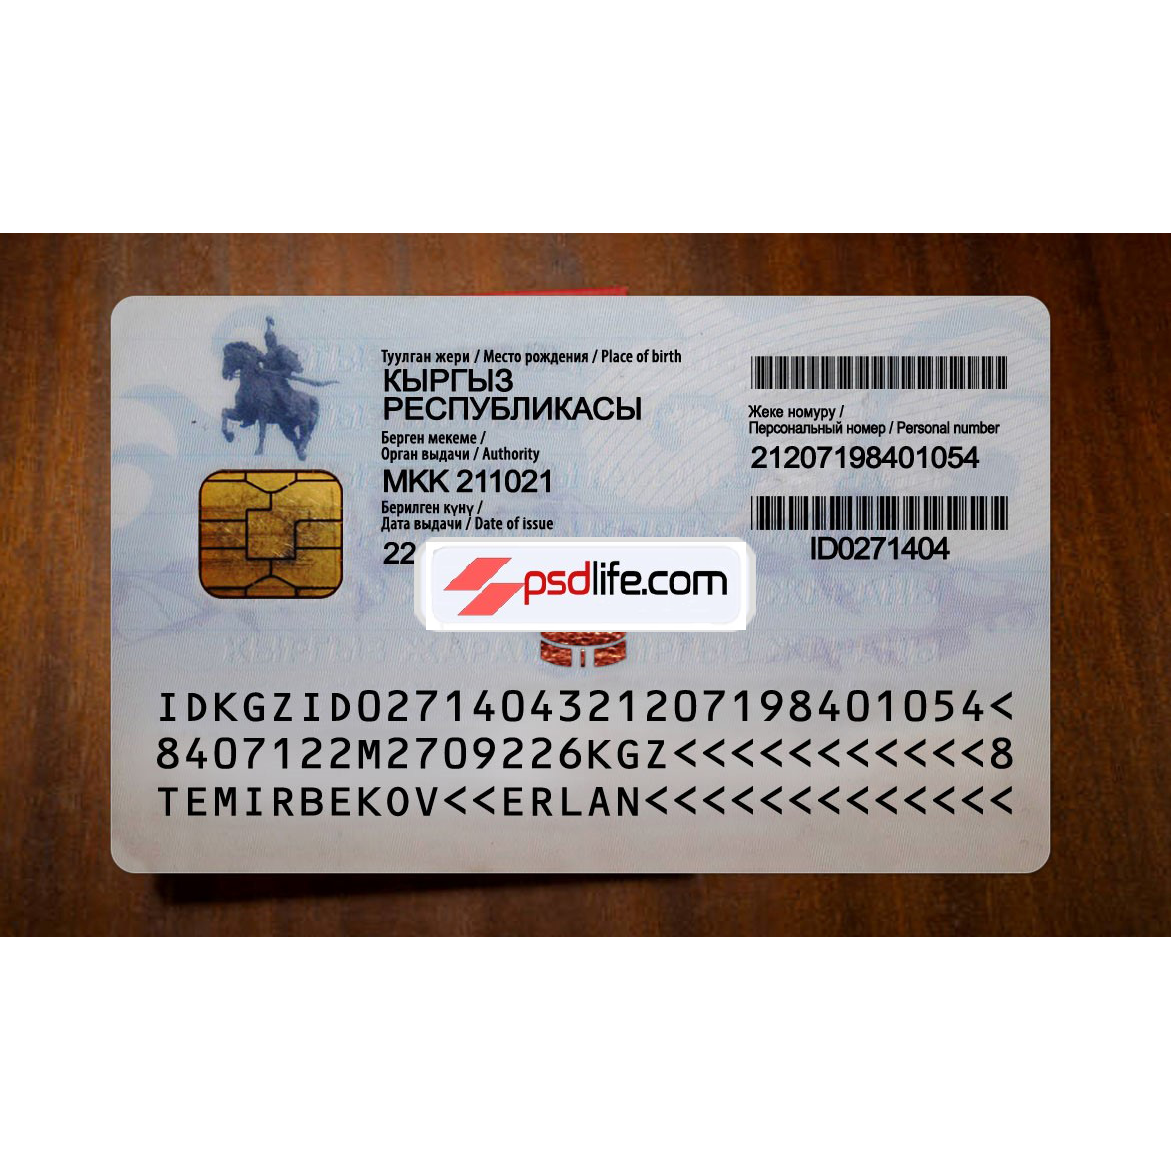 Kyrgyzstan ID card psd template full editabale | Kyrgyzstan id card Template photoshop use for | ID Card Number Kyrgyzstan | Кыргызстан ID CARD жасалма Psd шаблон түзөтүү акысыз жүктөп алуу